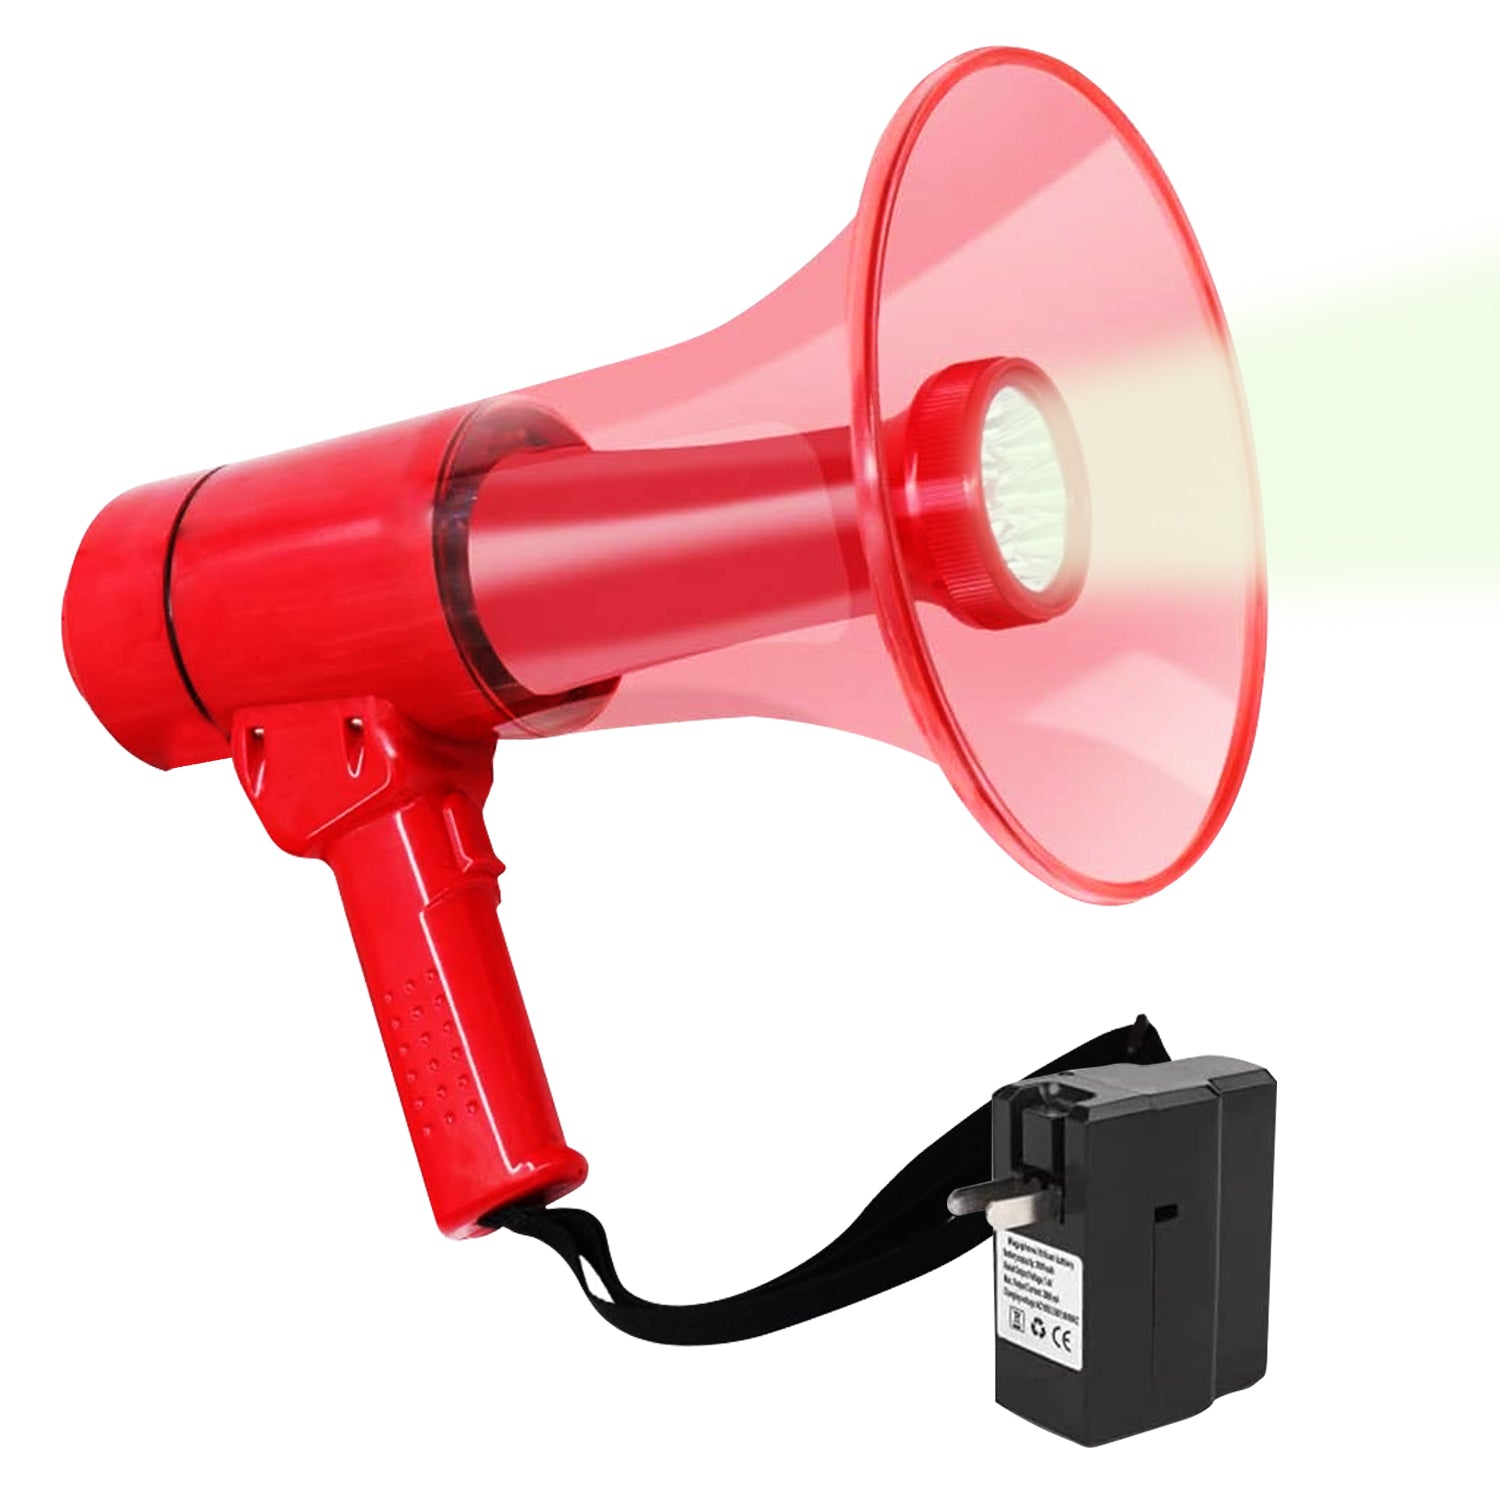 5 Core High Power Megaphone 40W Peak Loud Siren Noise Maker Professional Bullhorn Speaker PA System w LED Flashlight Recording USB SD Card Adjustable Volume for Sports Speeches Events Emergencies - HW 18 WP RED